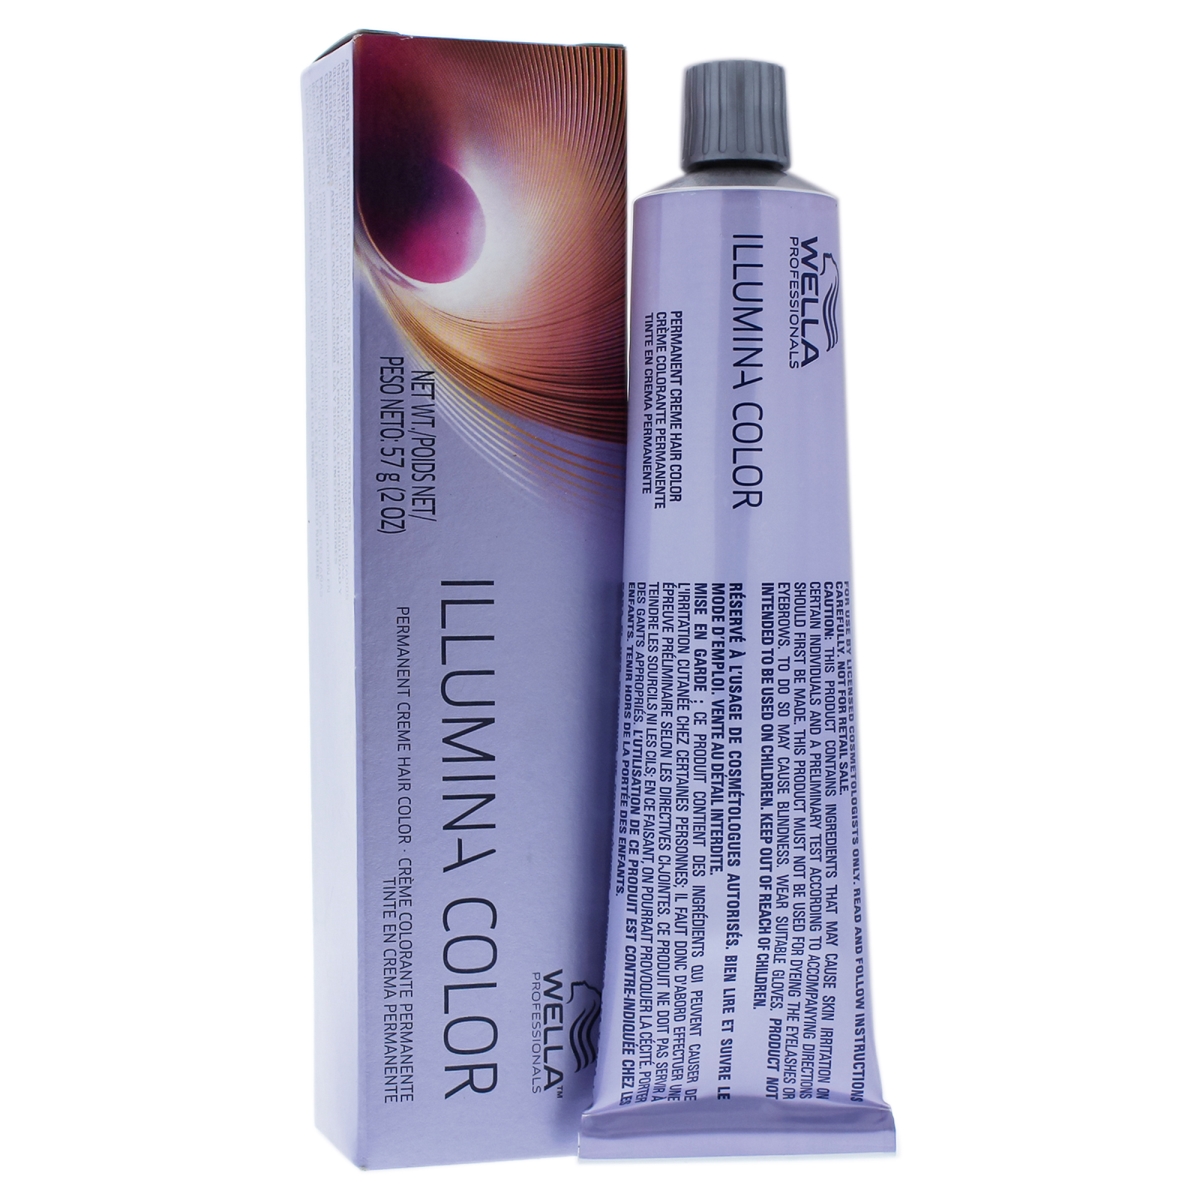 I0087026 Illumina Color Permanent Creme Hair Color For Unisex - 5 81 Light Brown & Pearl Ash - 2 Oz